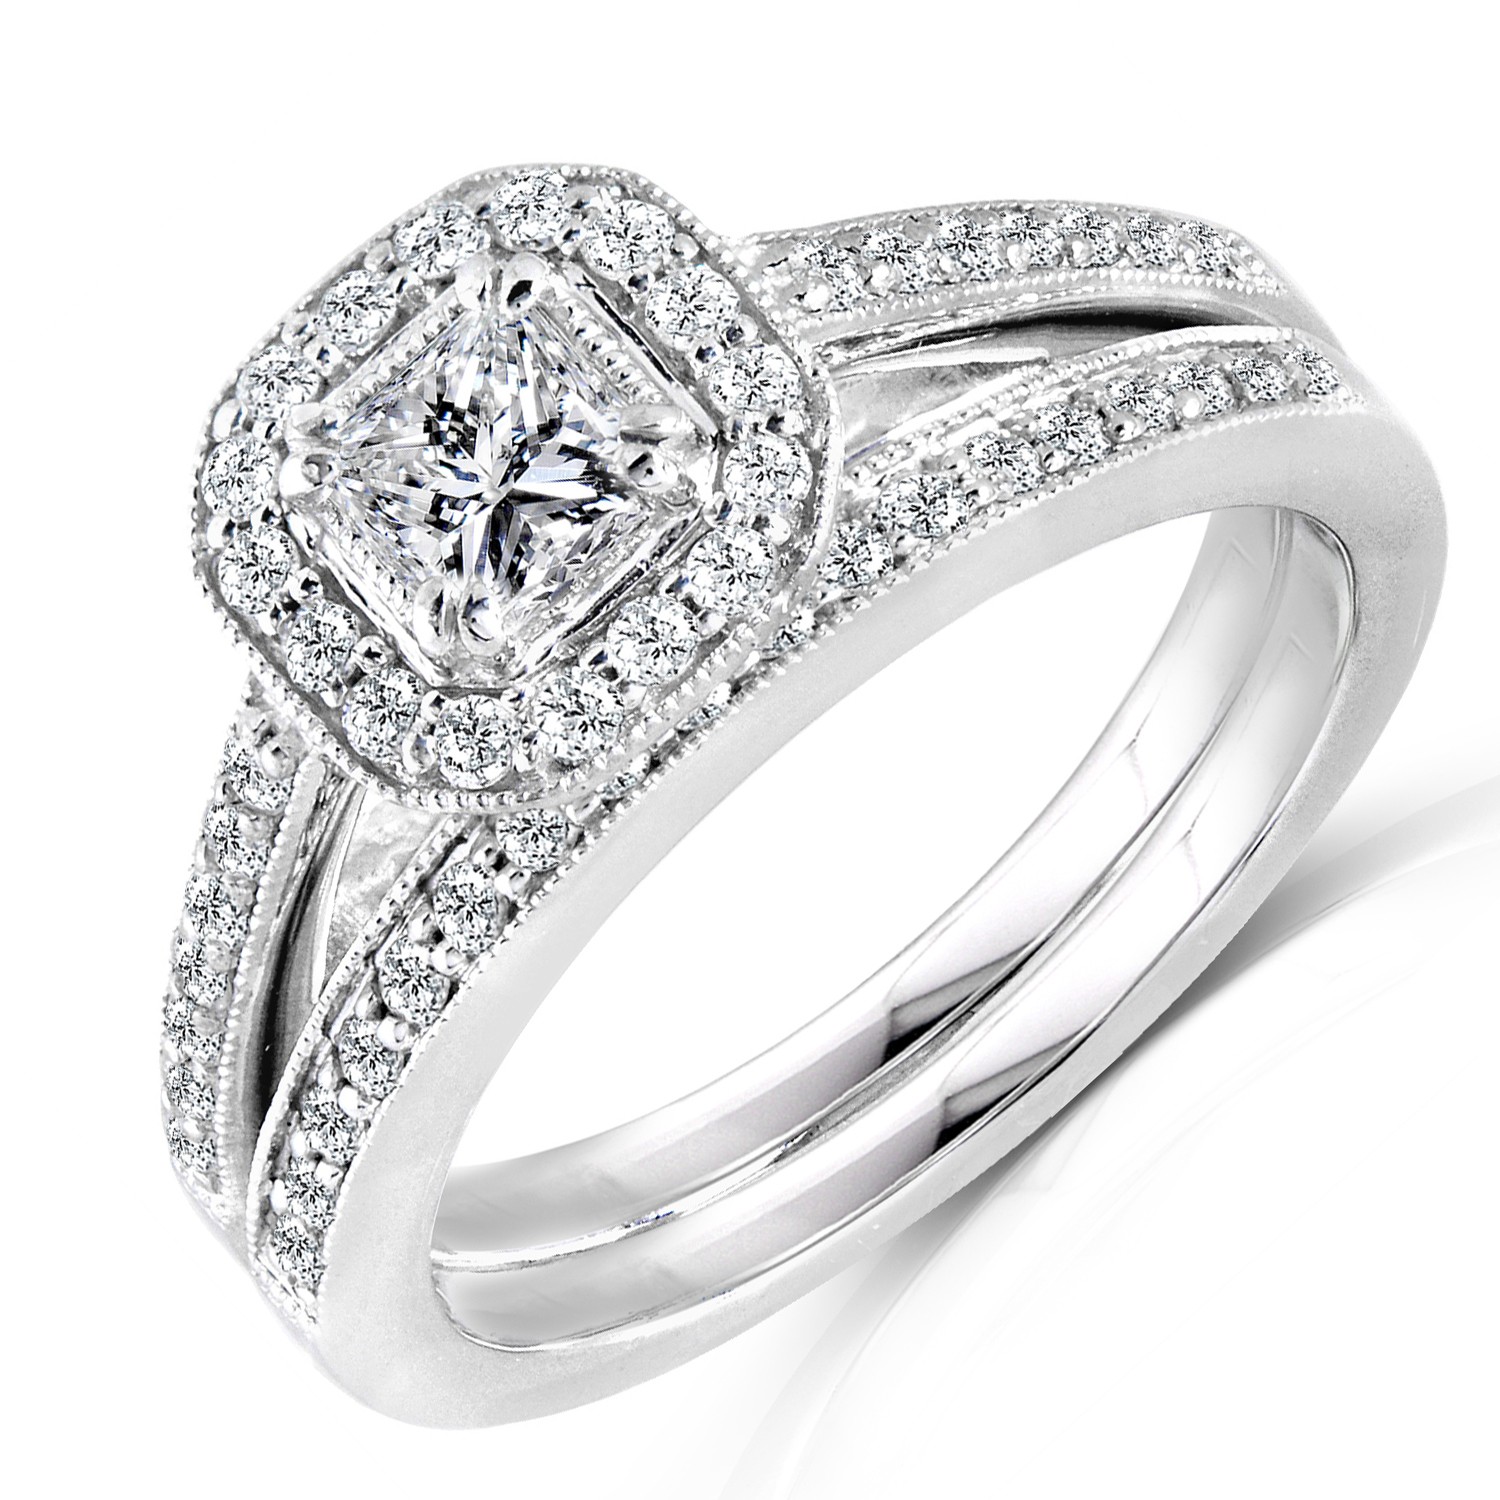 ... Sale! Handcrafted Wedding Set Ring 1 Carat Princess Cut Diamond on